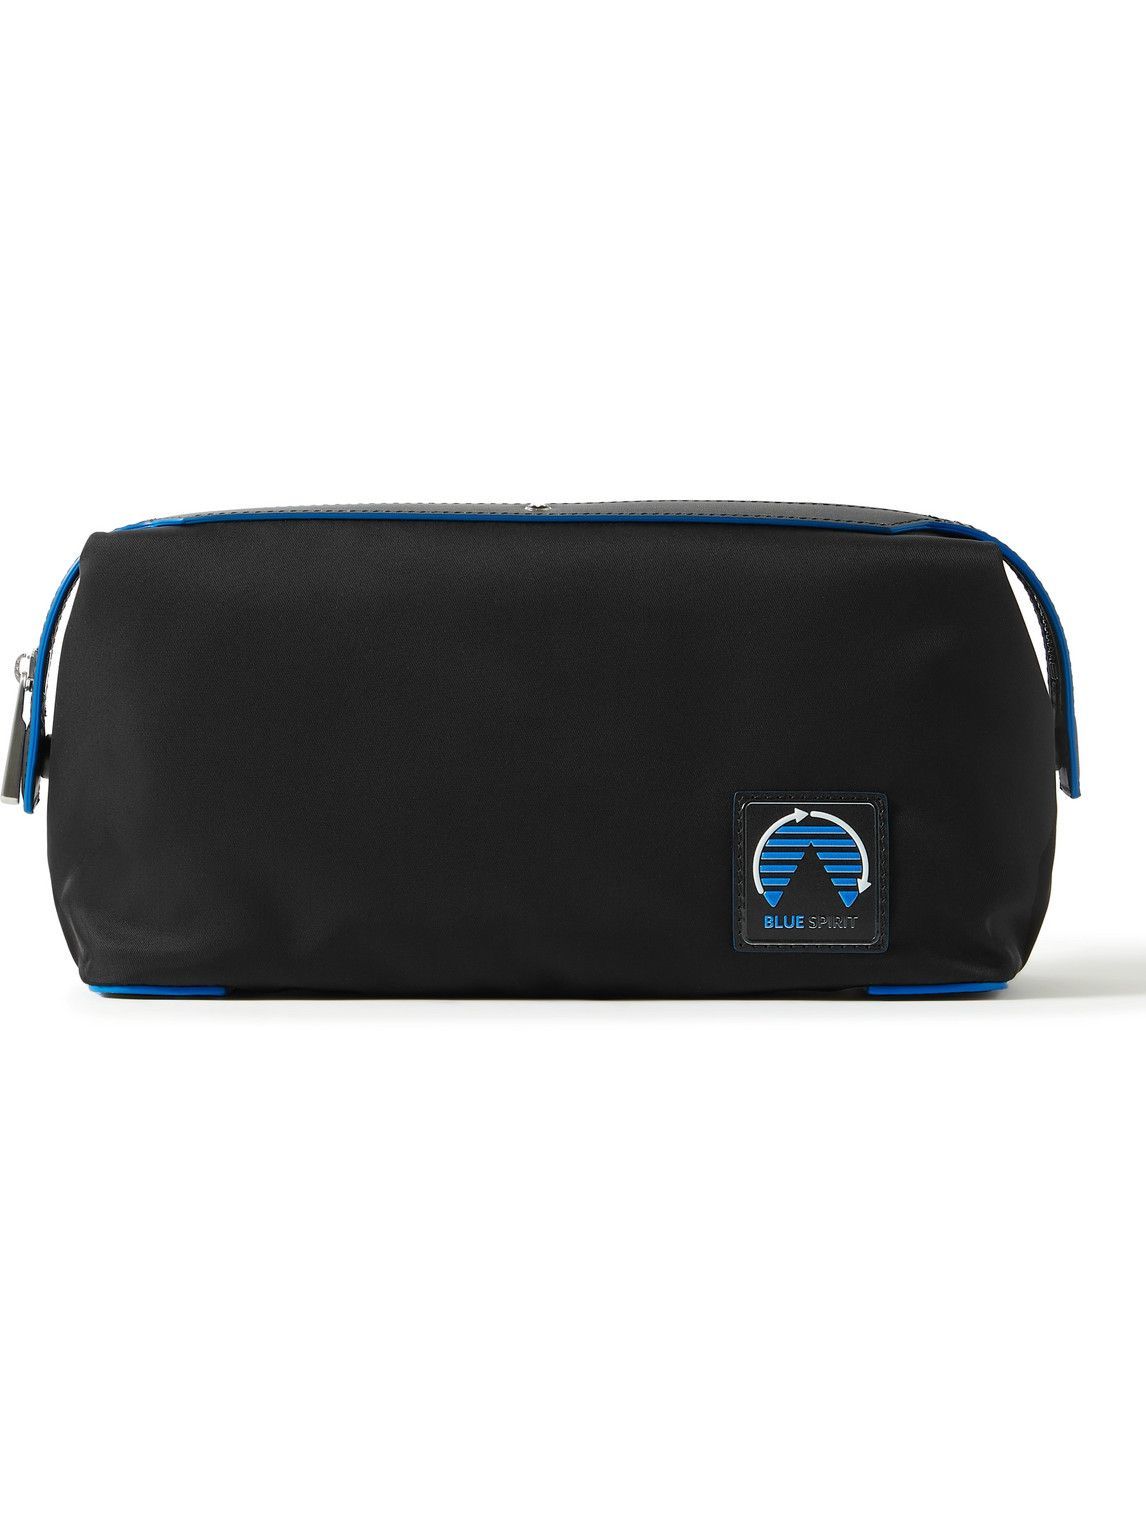 Montblanc - Blue Spirit Leather-Trimmed ECONYL Wash Bag Montblanc